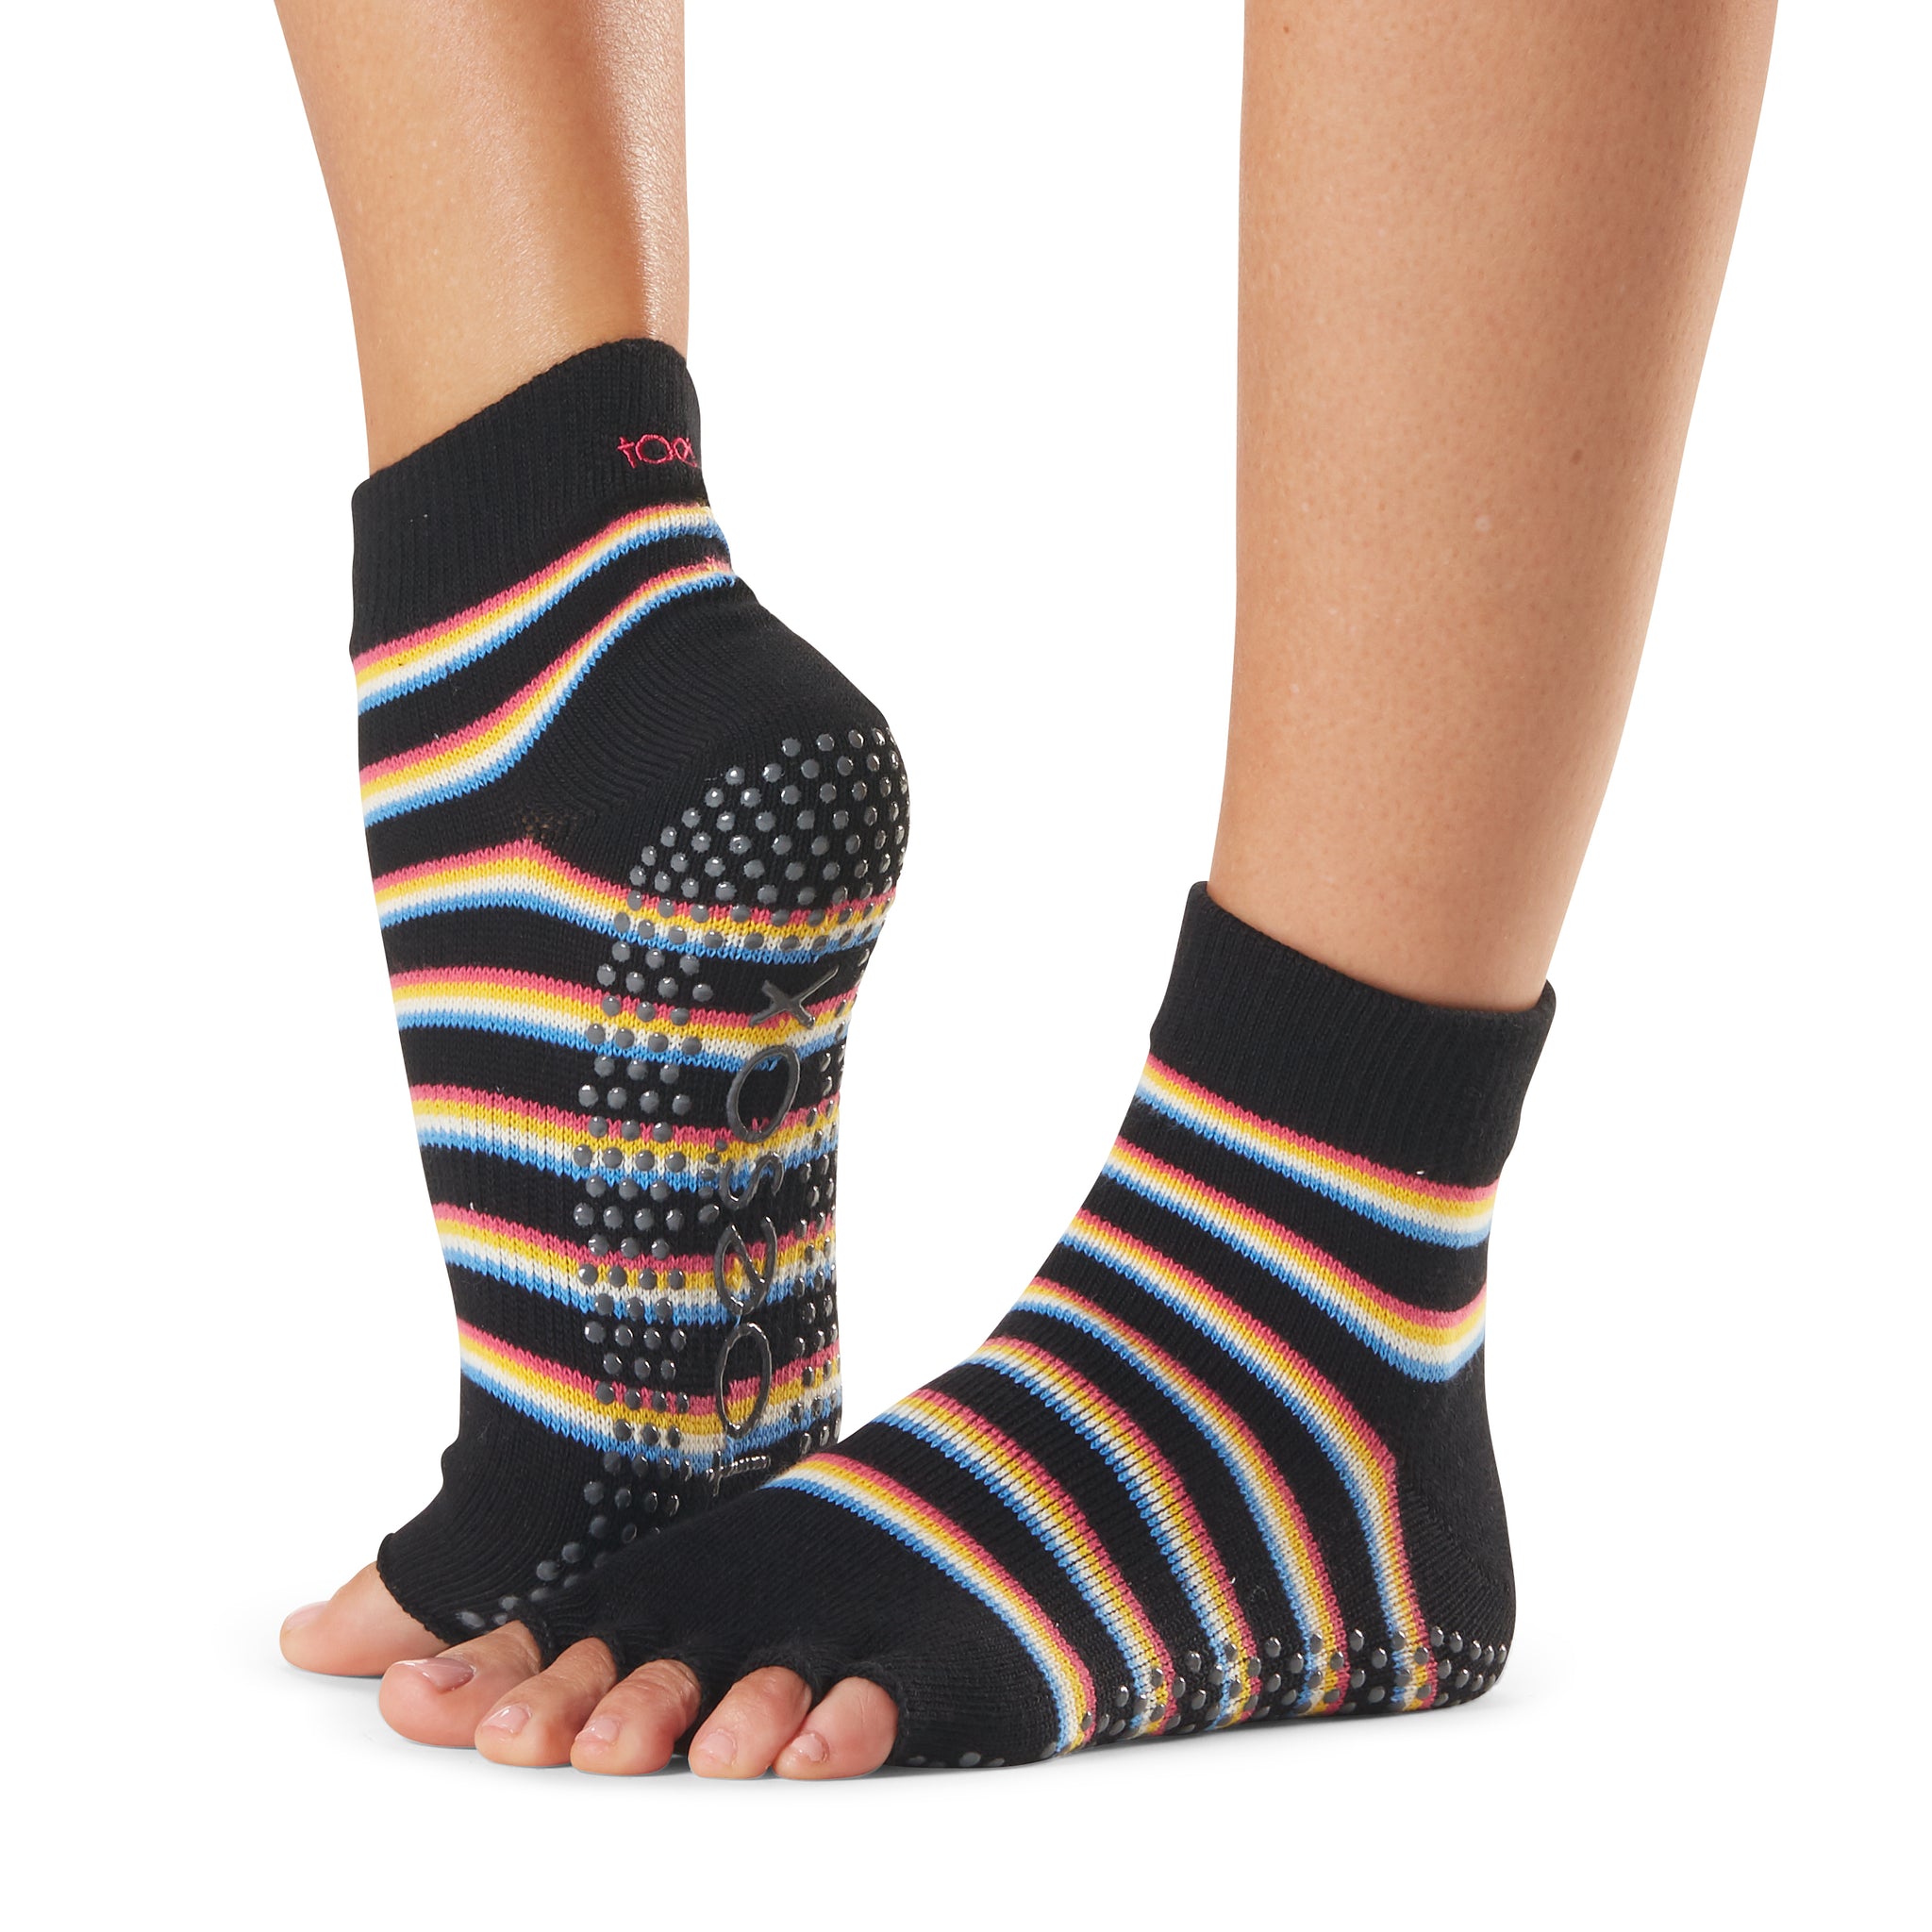 Toesox - anti-slip sock - Bellarina with toes - Melon